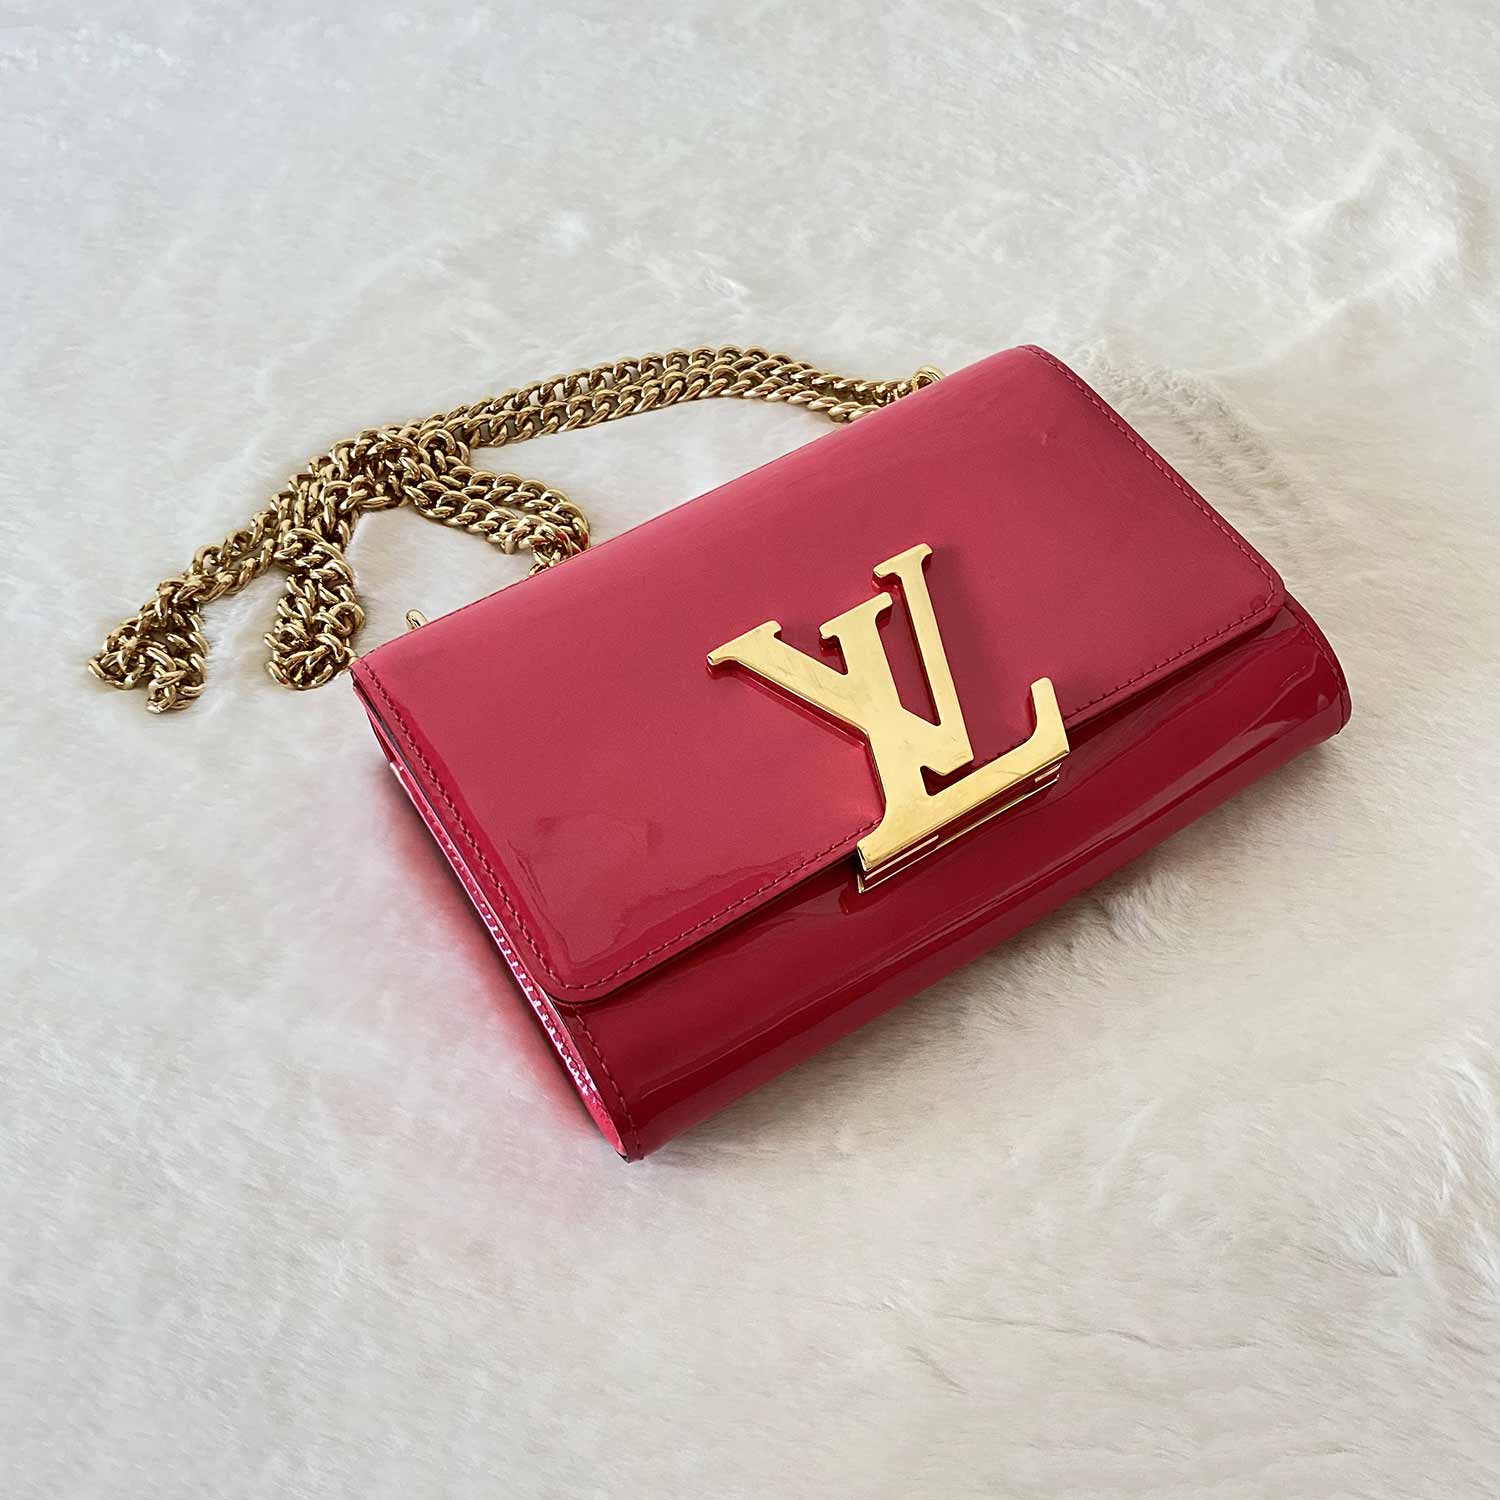 Louis Vuitton Pink Patent Leather Louise MM Handbag